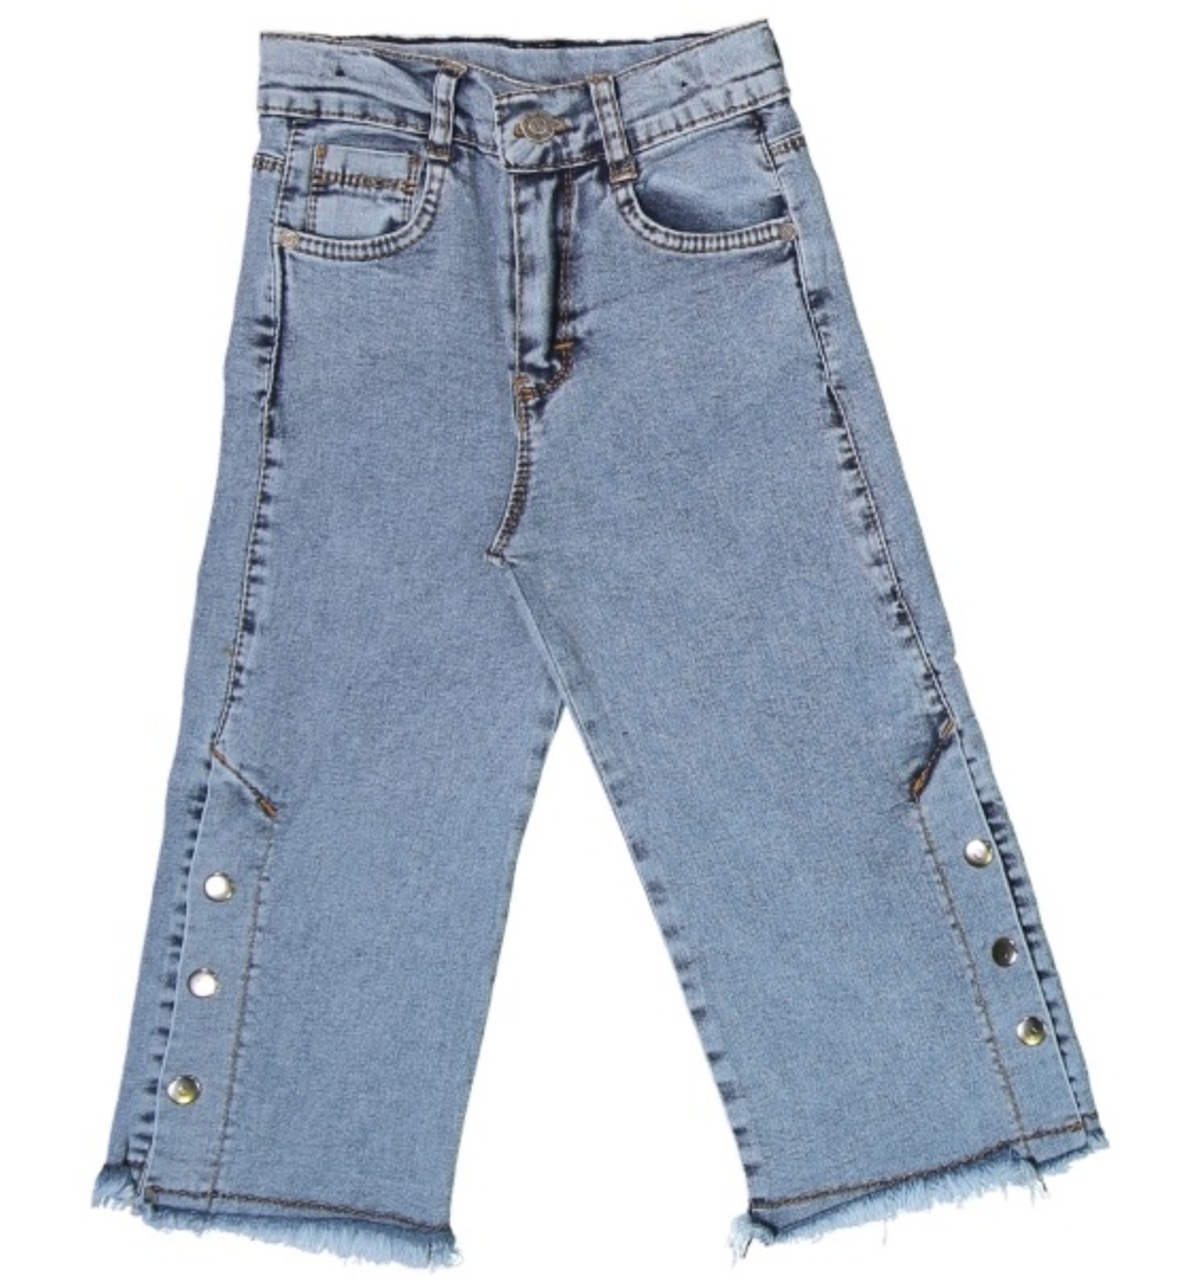 Kız Çocuk Çıtçıtlı Bol Paça Mavi Renk Kot Pantolon 001